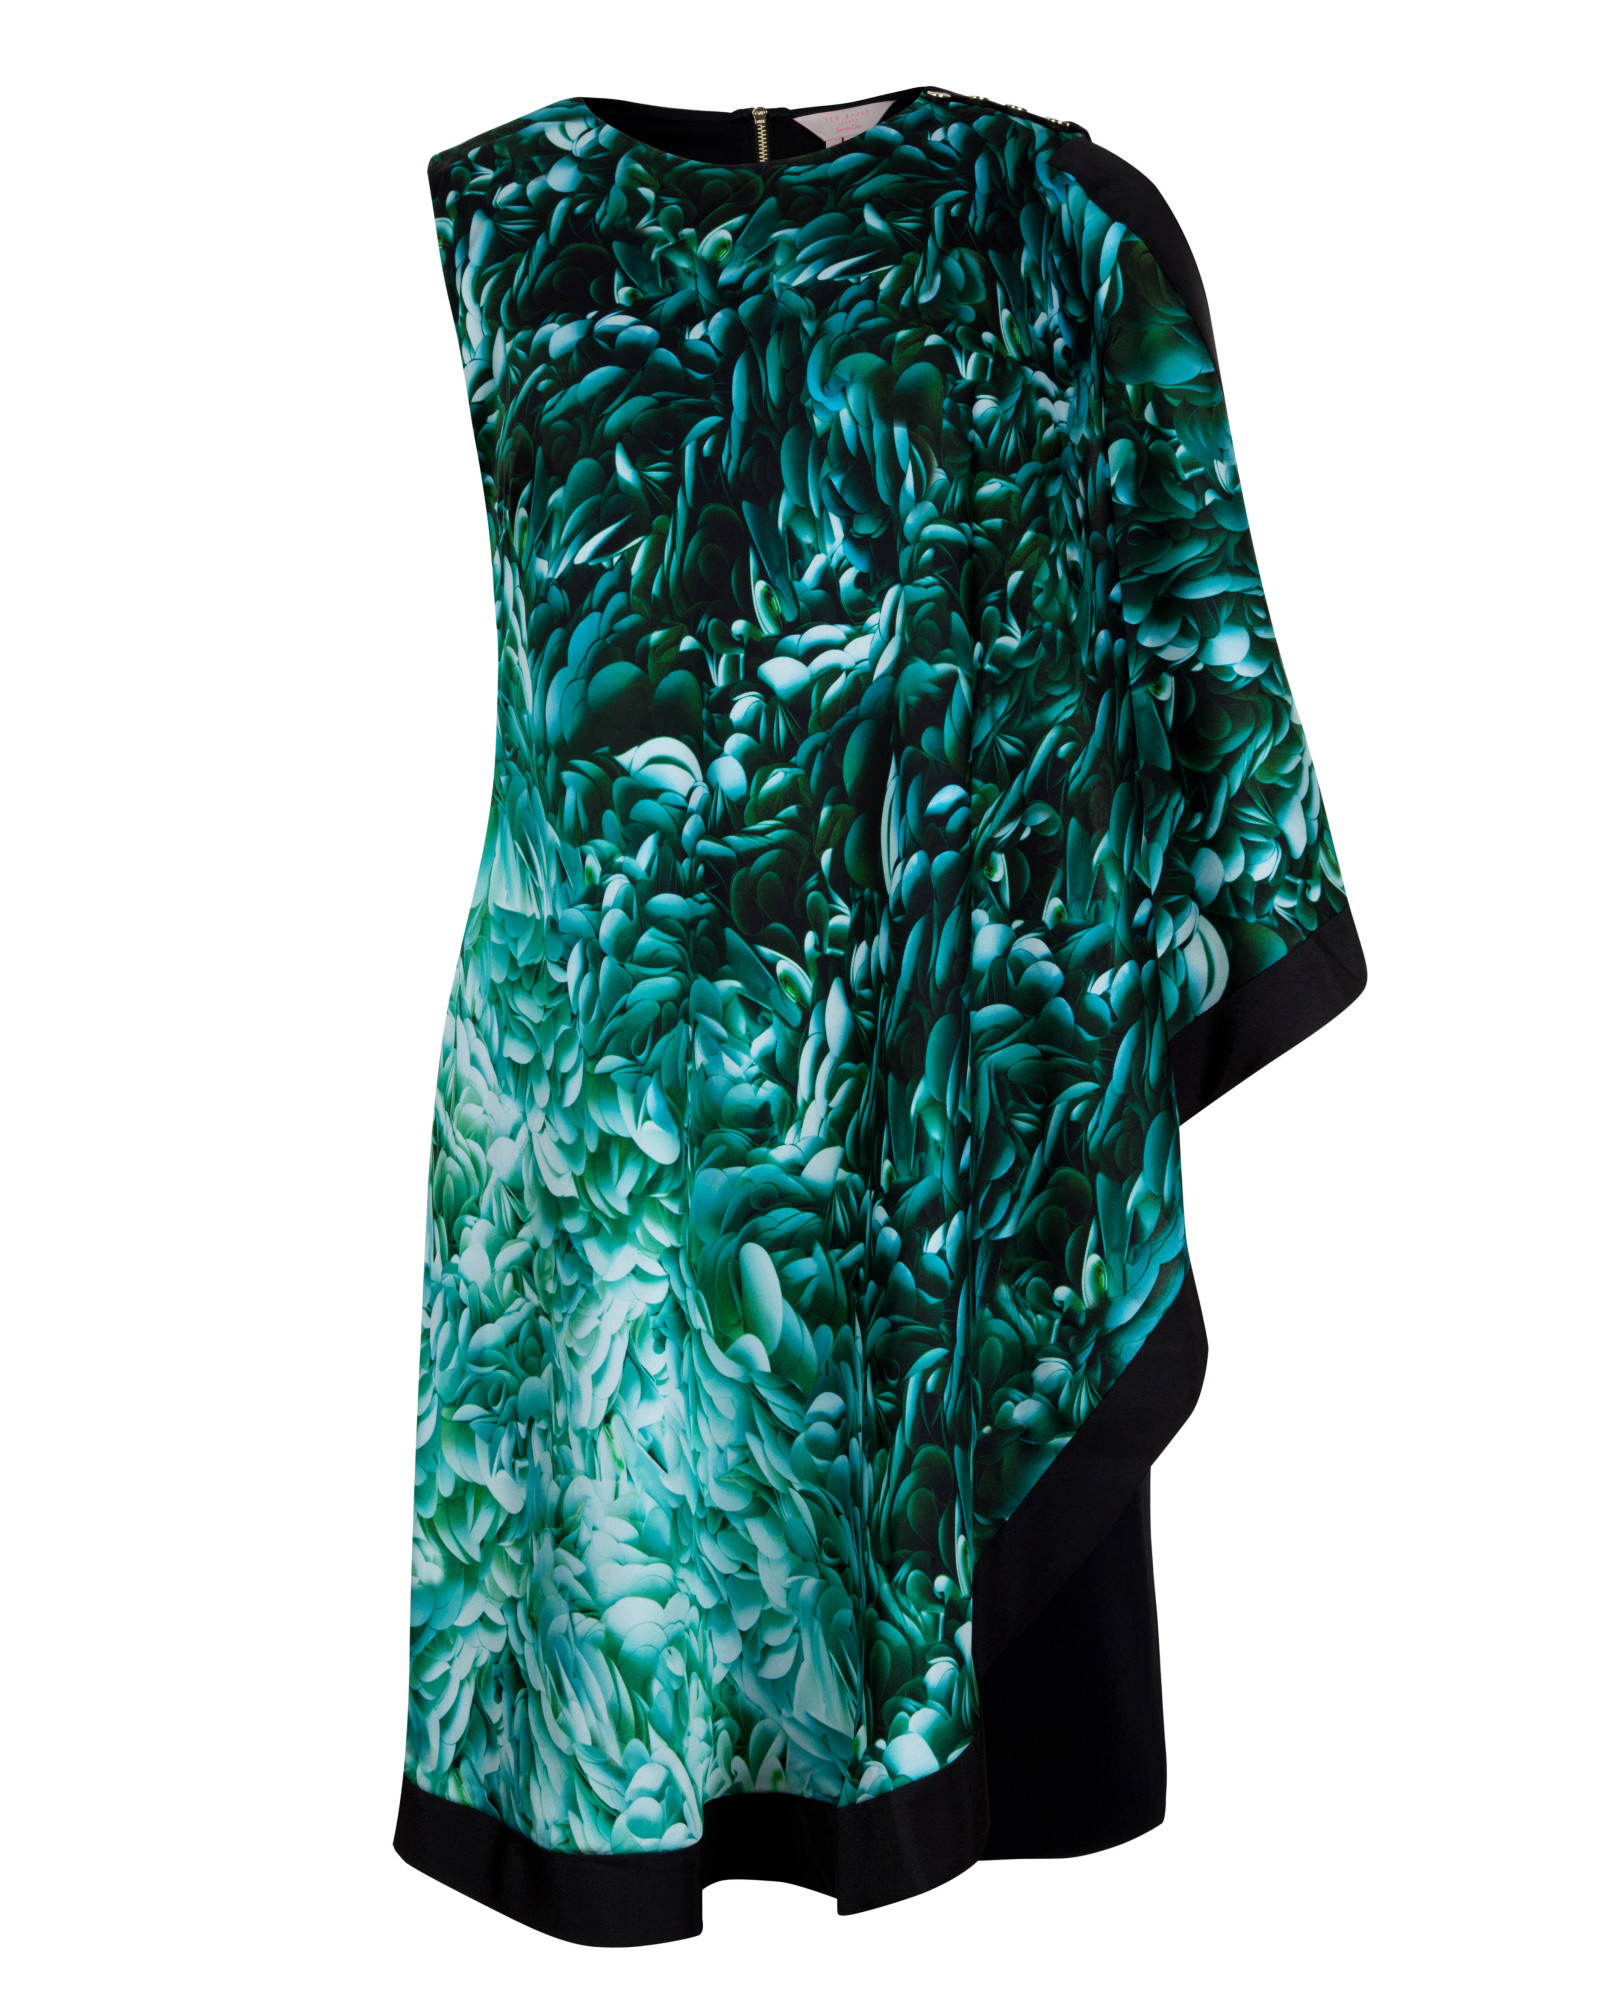 Ted Baker Rosette Printed Tunic Dress in Mid Green (Black) - Lyst